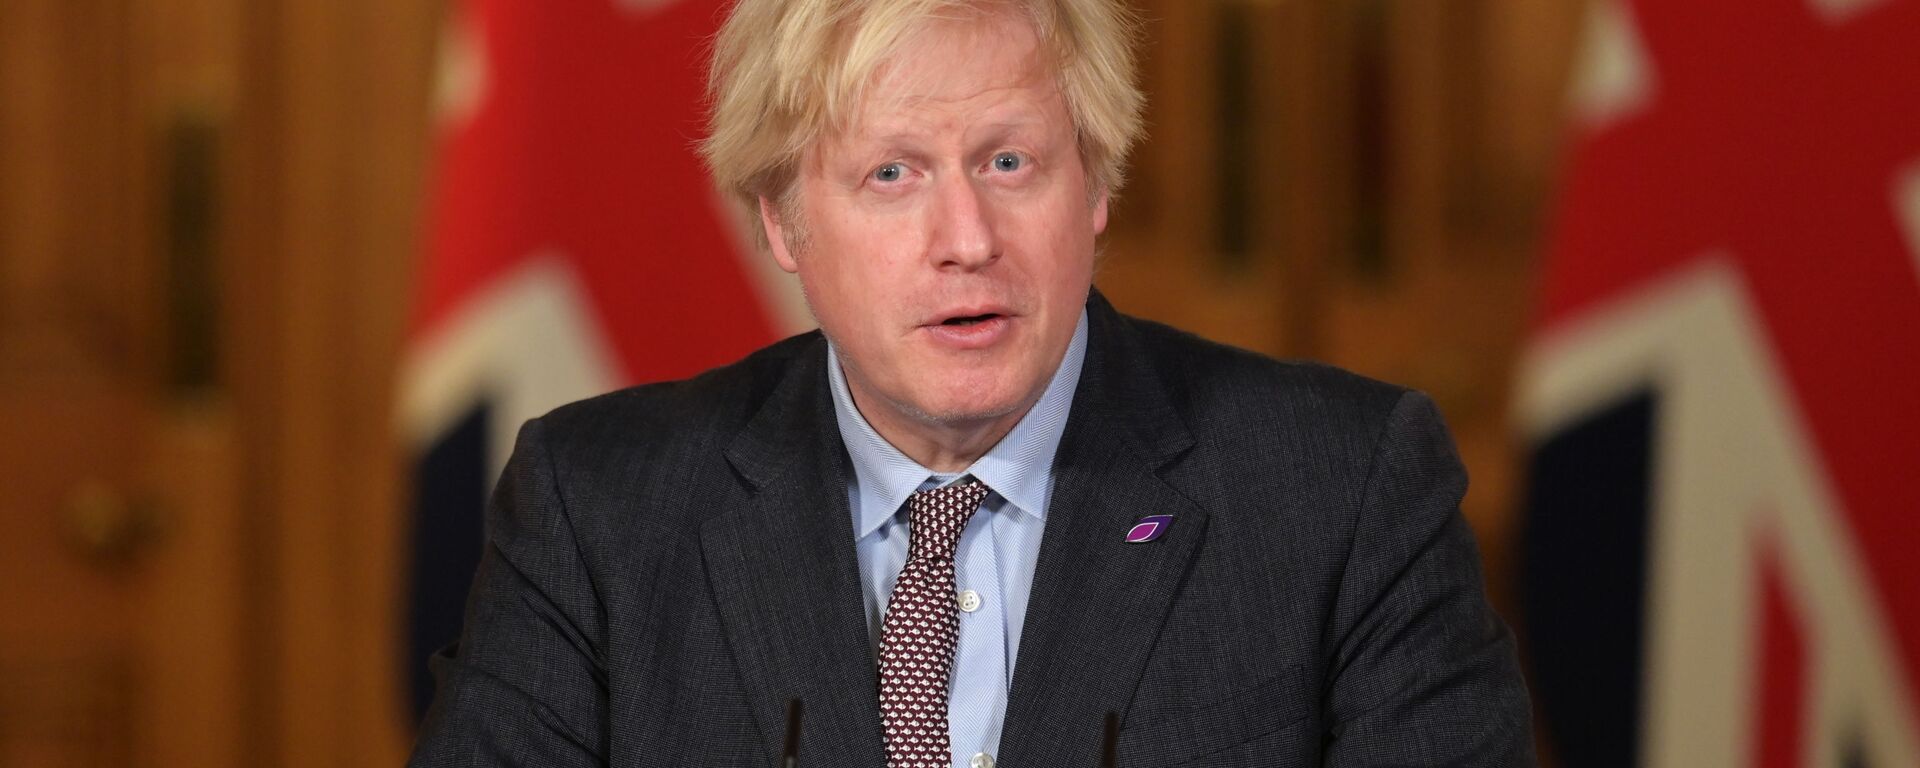 Boris Johnson, primer ministro del Reino Unido  - Sputnik Mundo, 1920, 25.06.2021